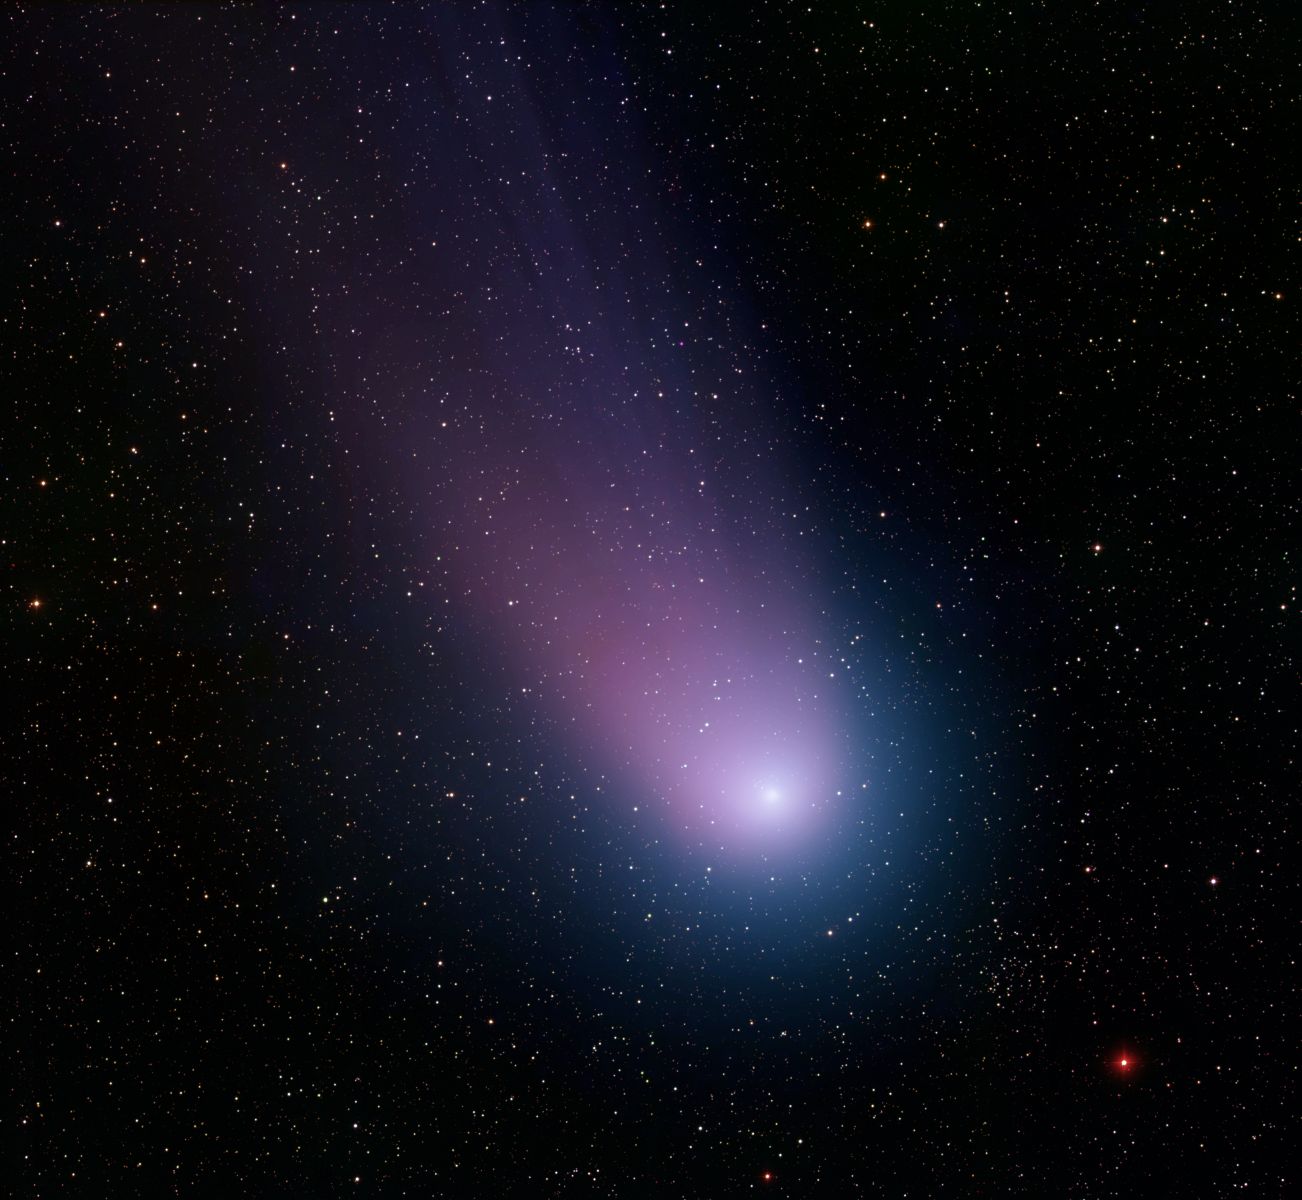 Image of comet NEAT taken by the Kitt Peak National Observatory in Arizona, USA